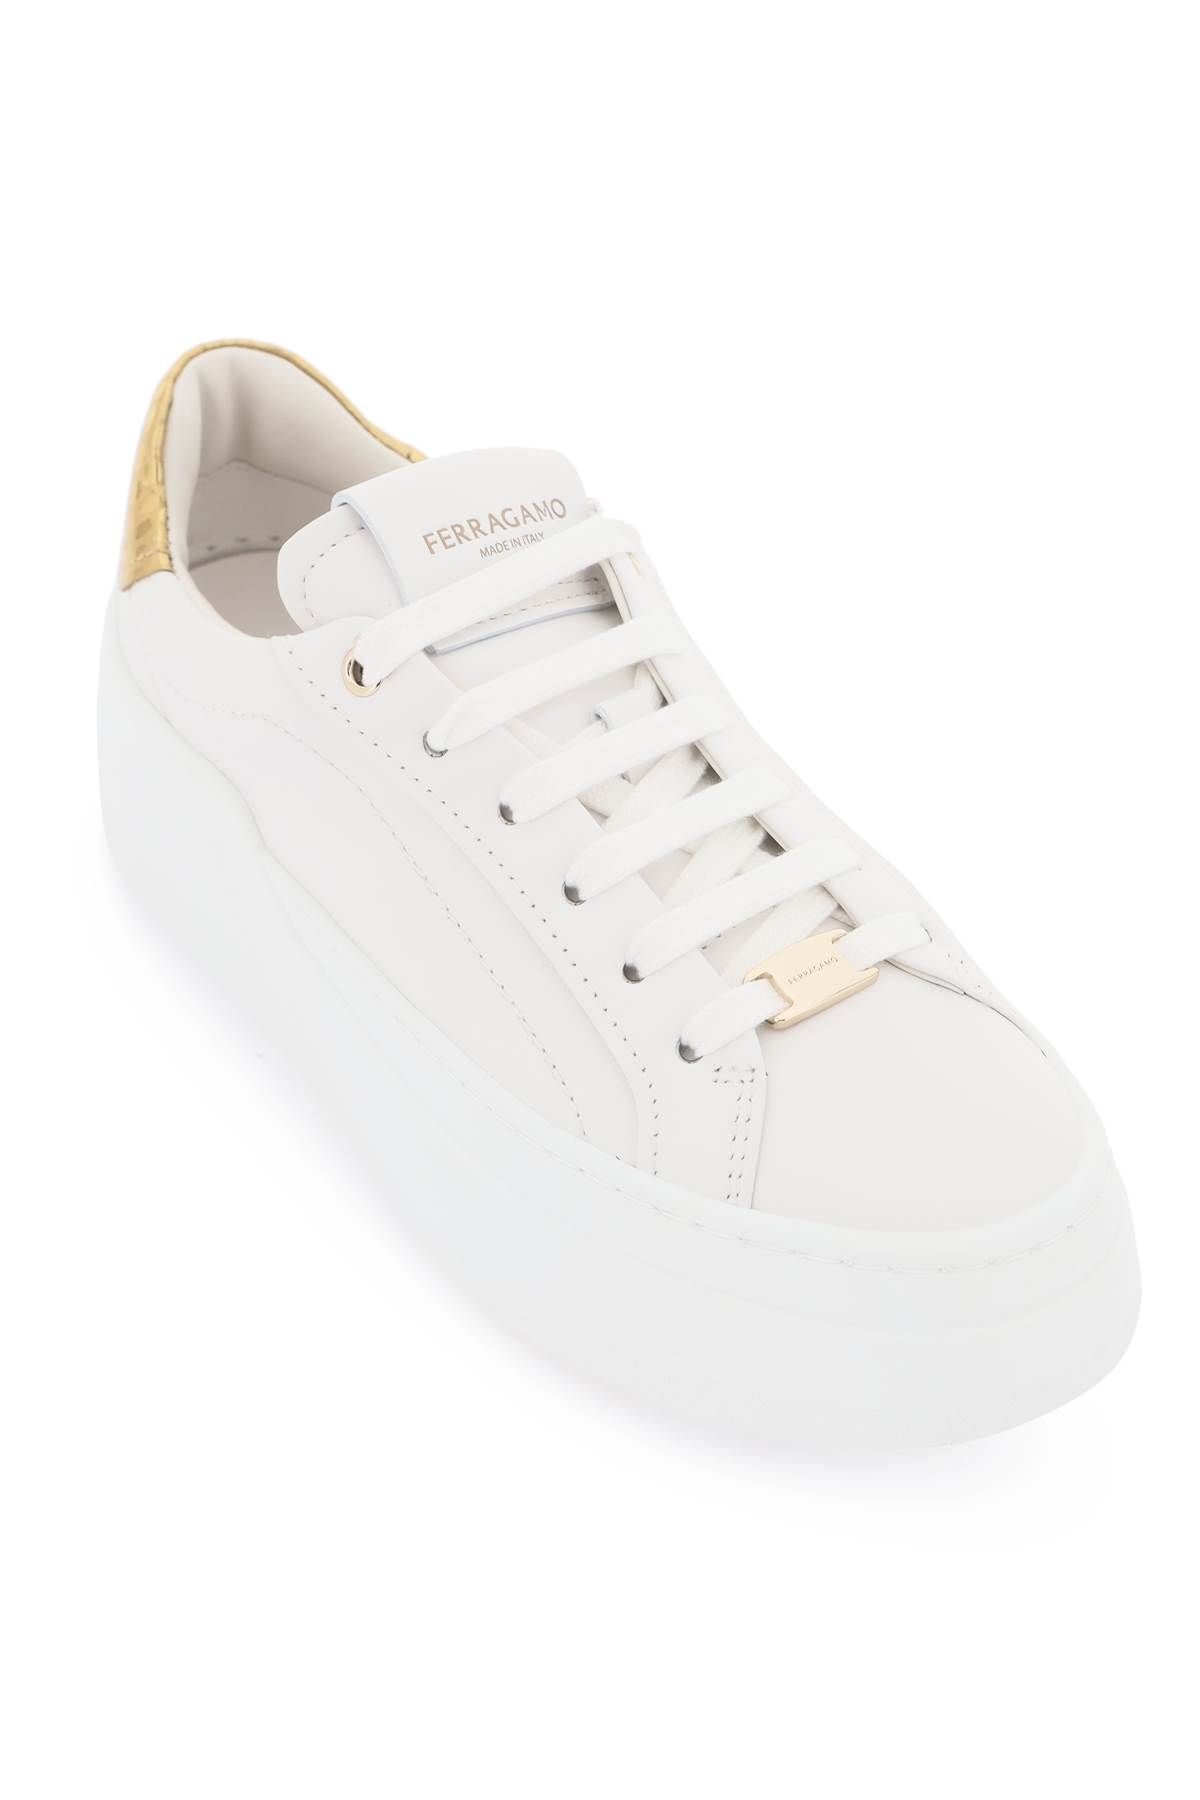 Shop Ferragamo Platform Sneakers In White